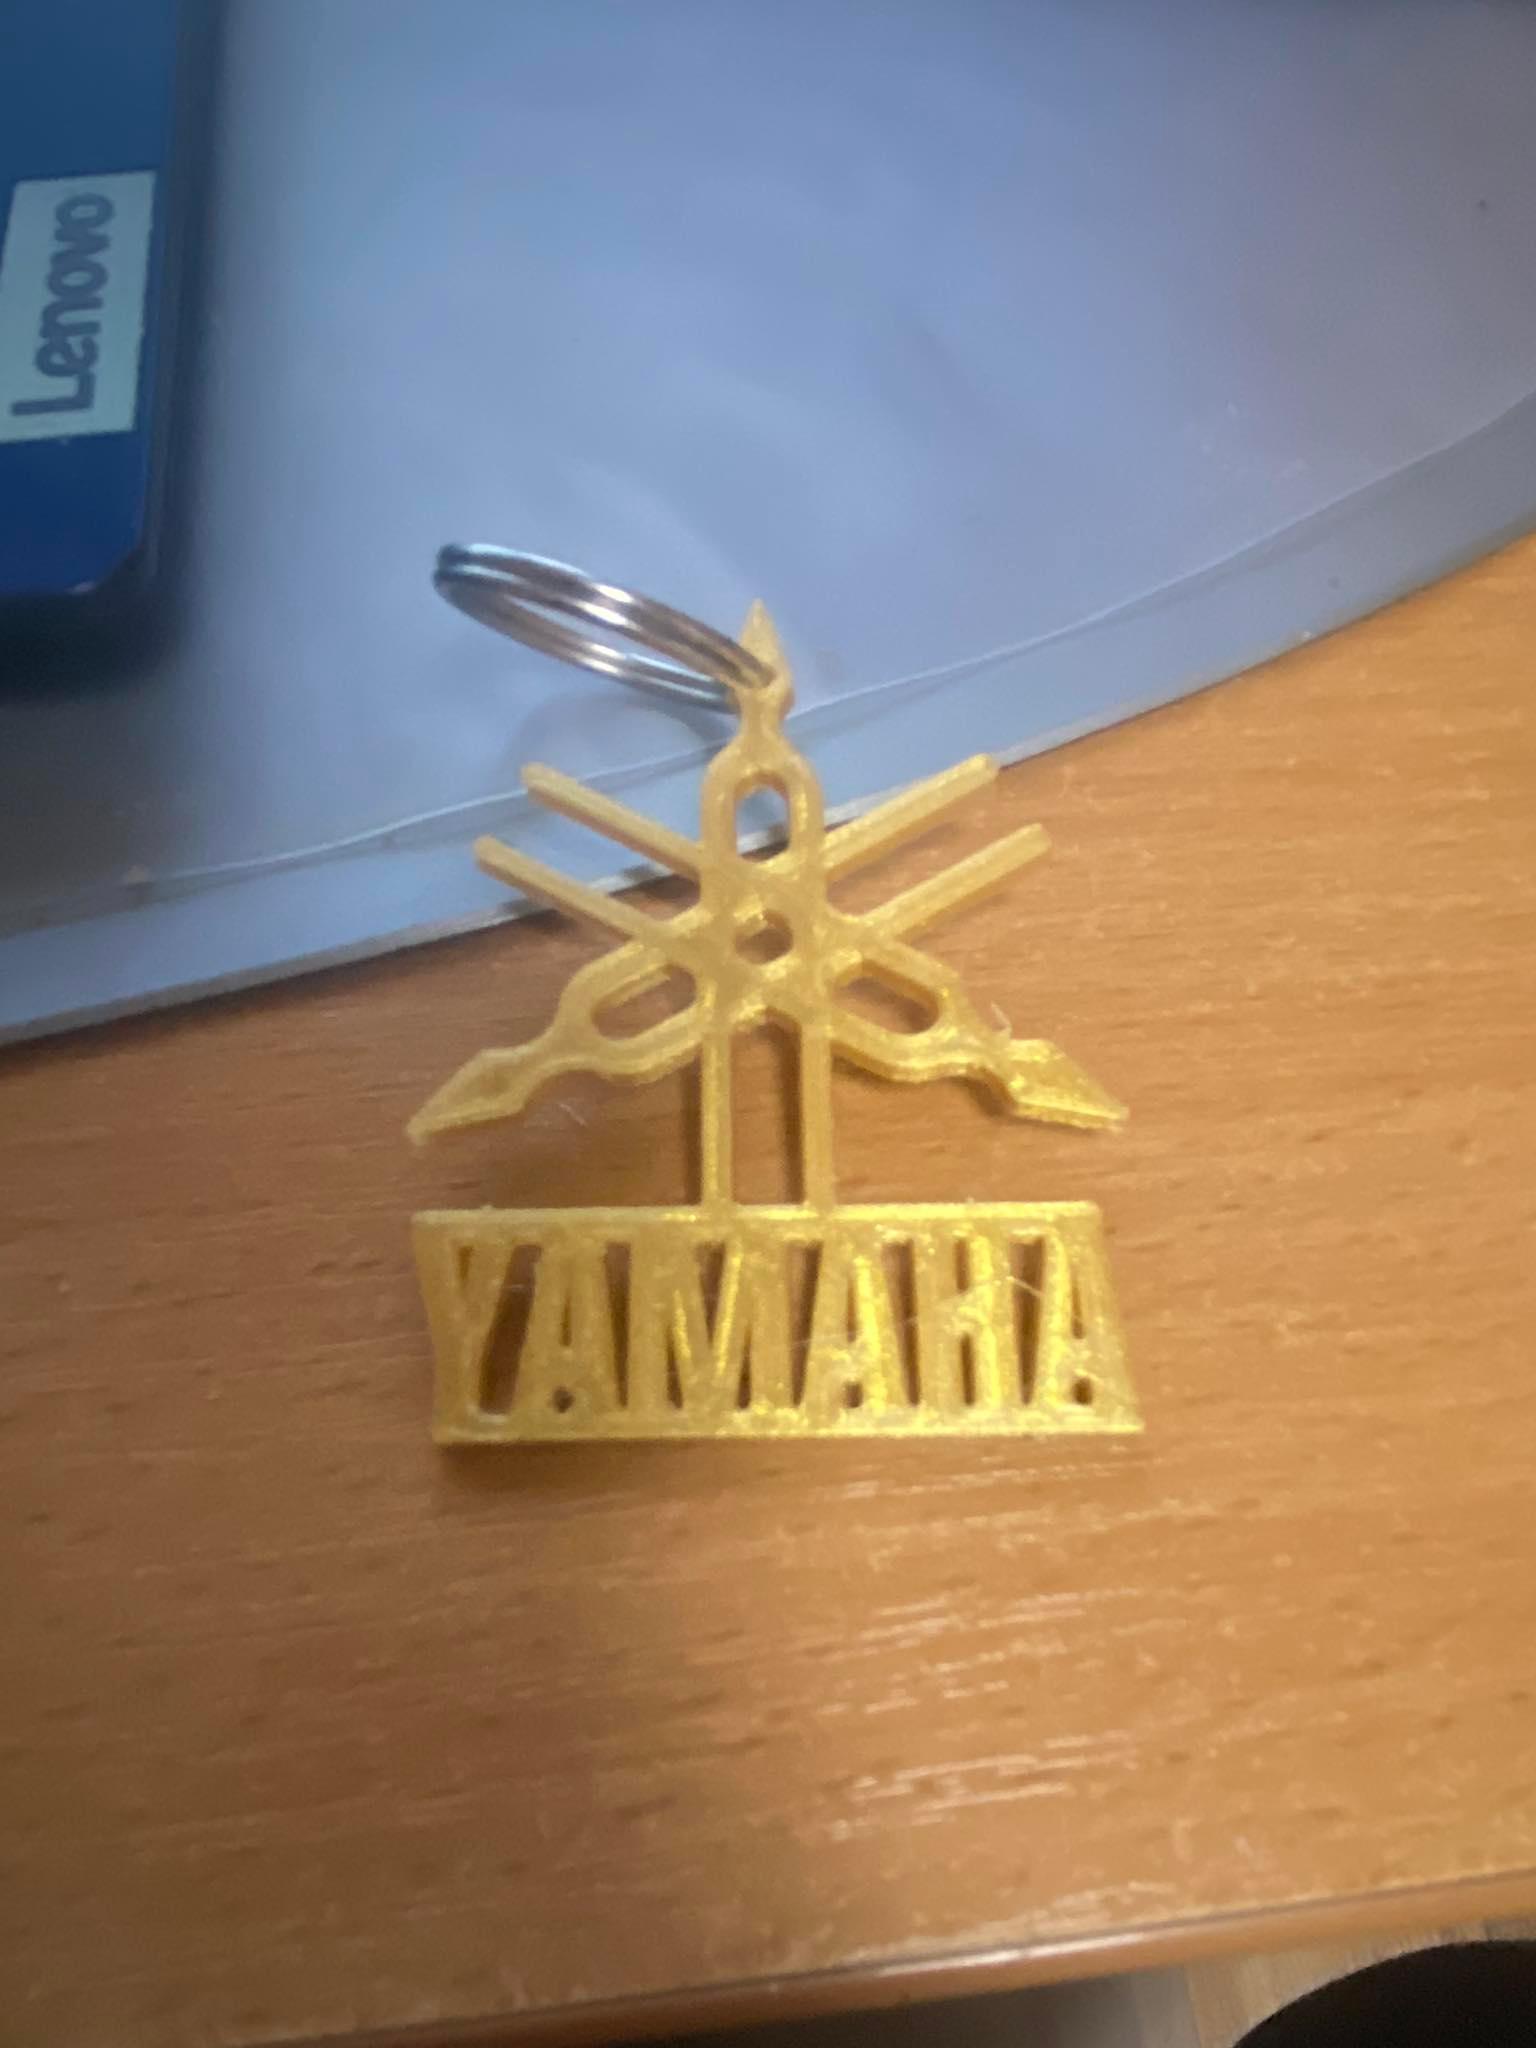 Yamaha key chain or christmas ornament 3d model